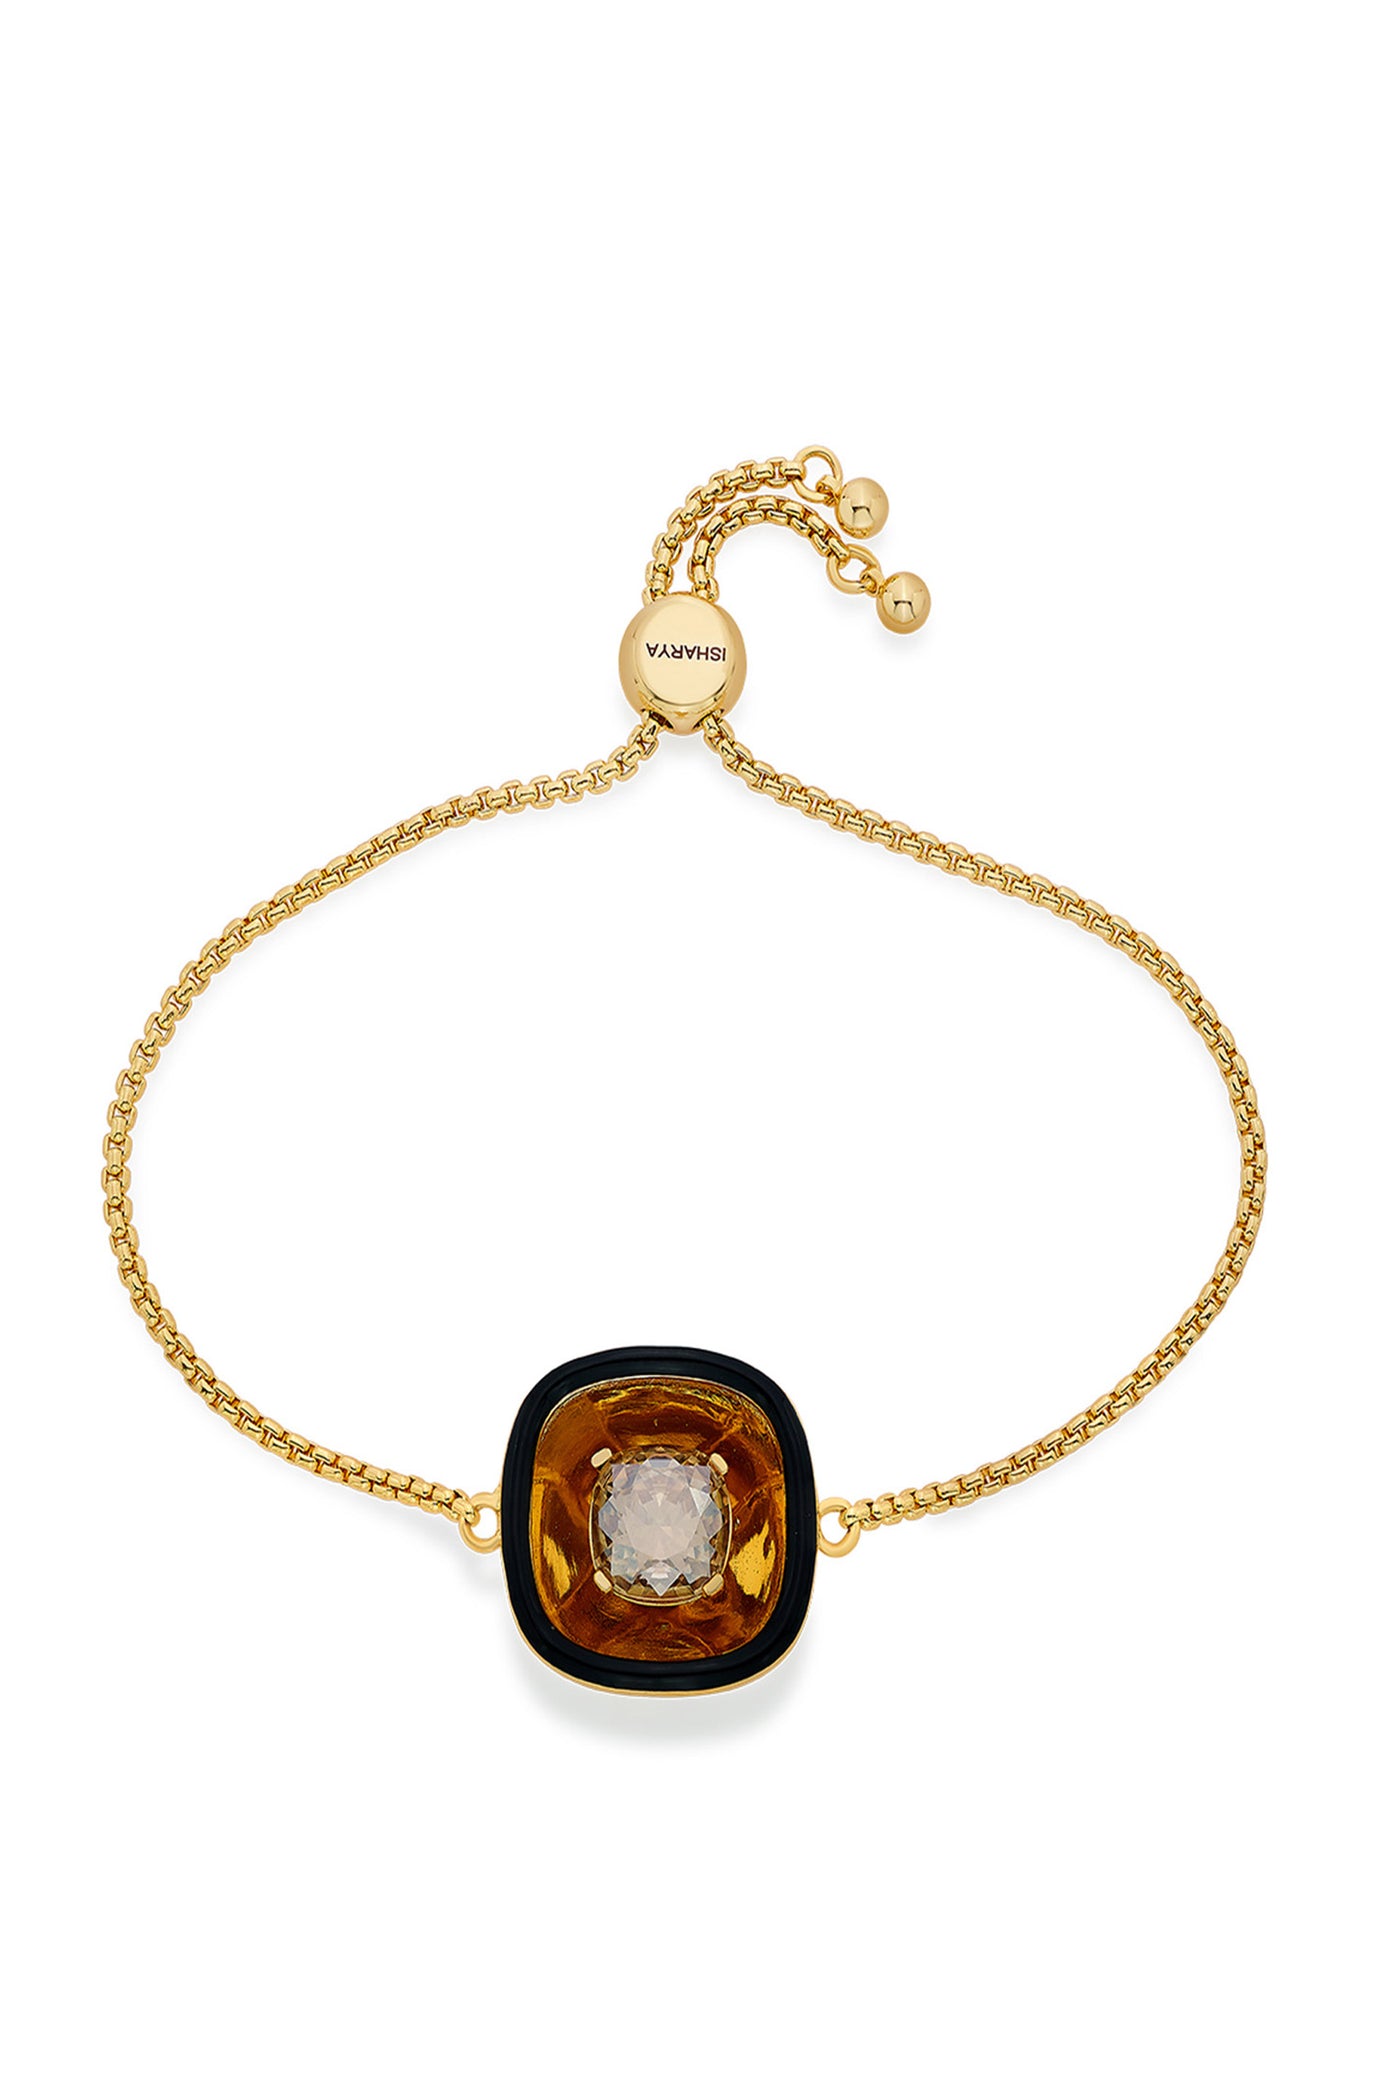 Isharya Bling Glory Wrap Crystal Bracelet In 18Kt Gold Plated fashion jewellery online shopping melange singapore indian designer wear